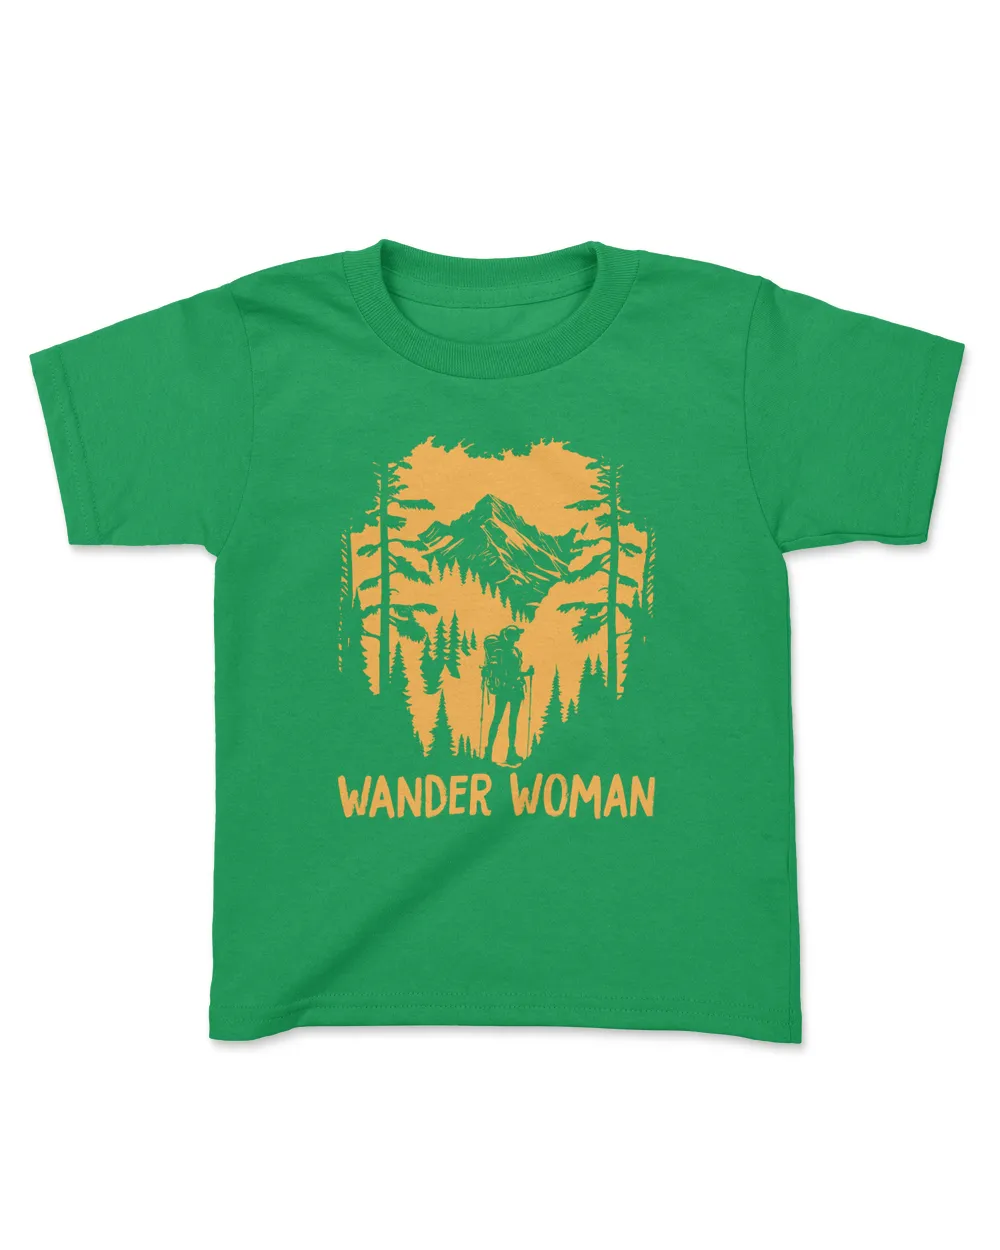 Wander Woman Hiking Tshirt